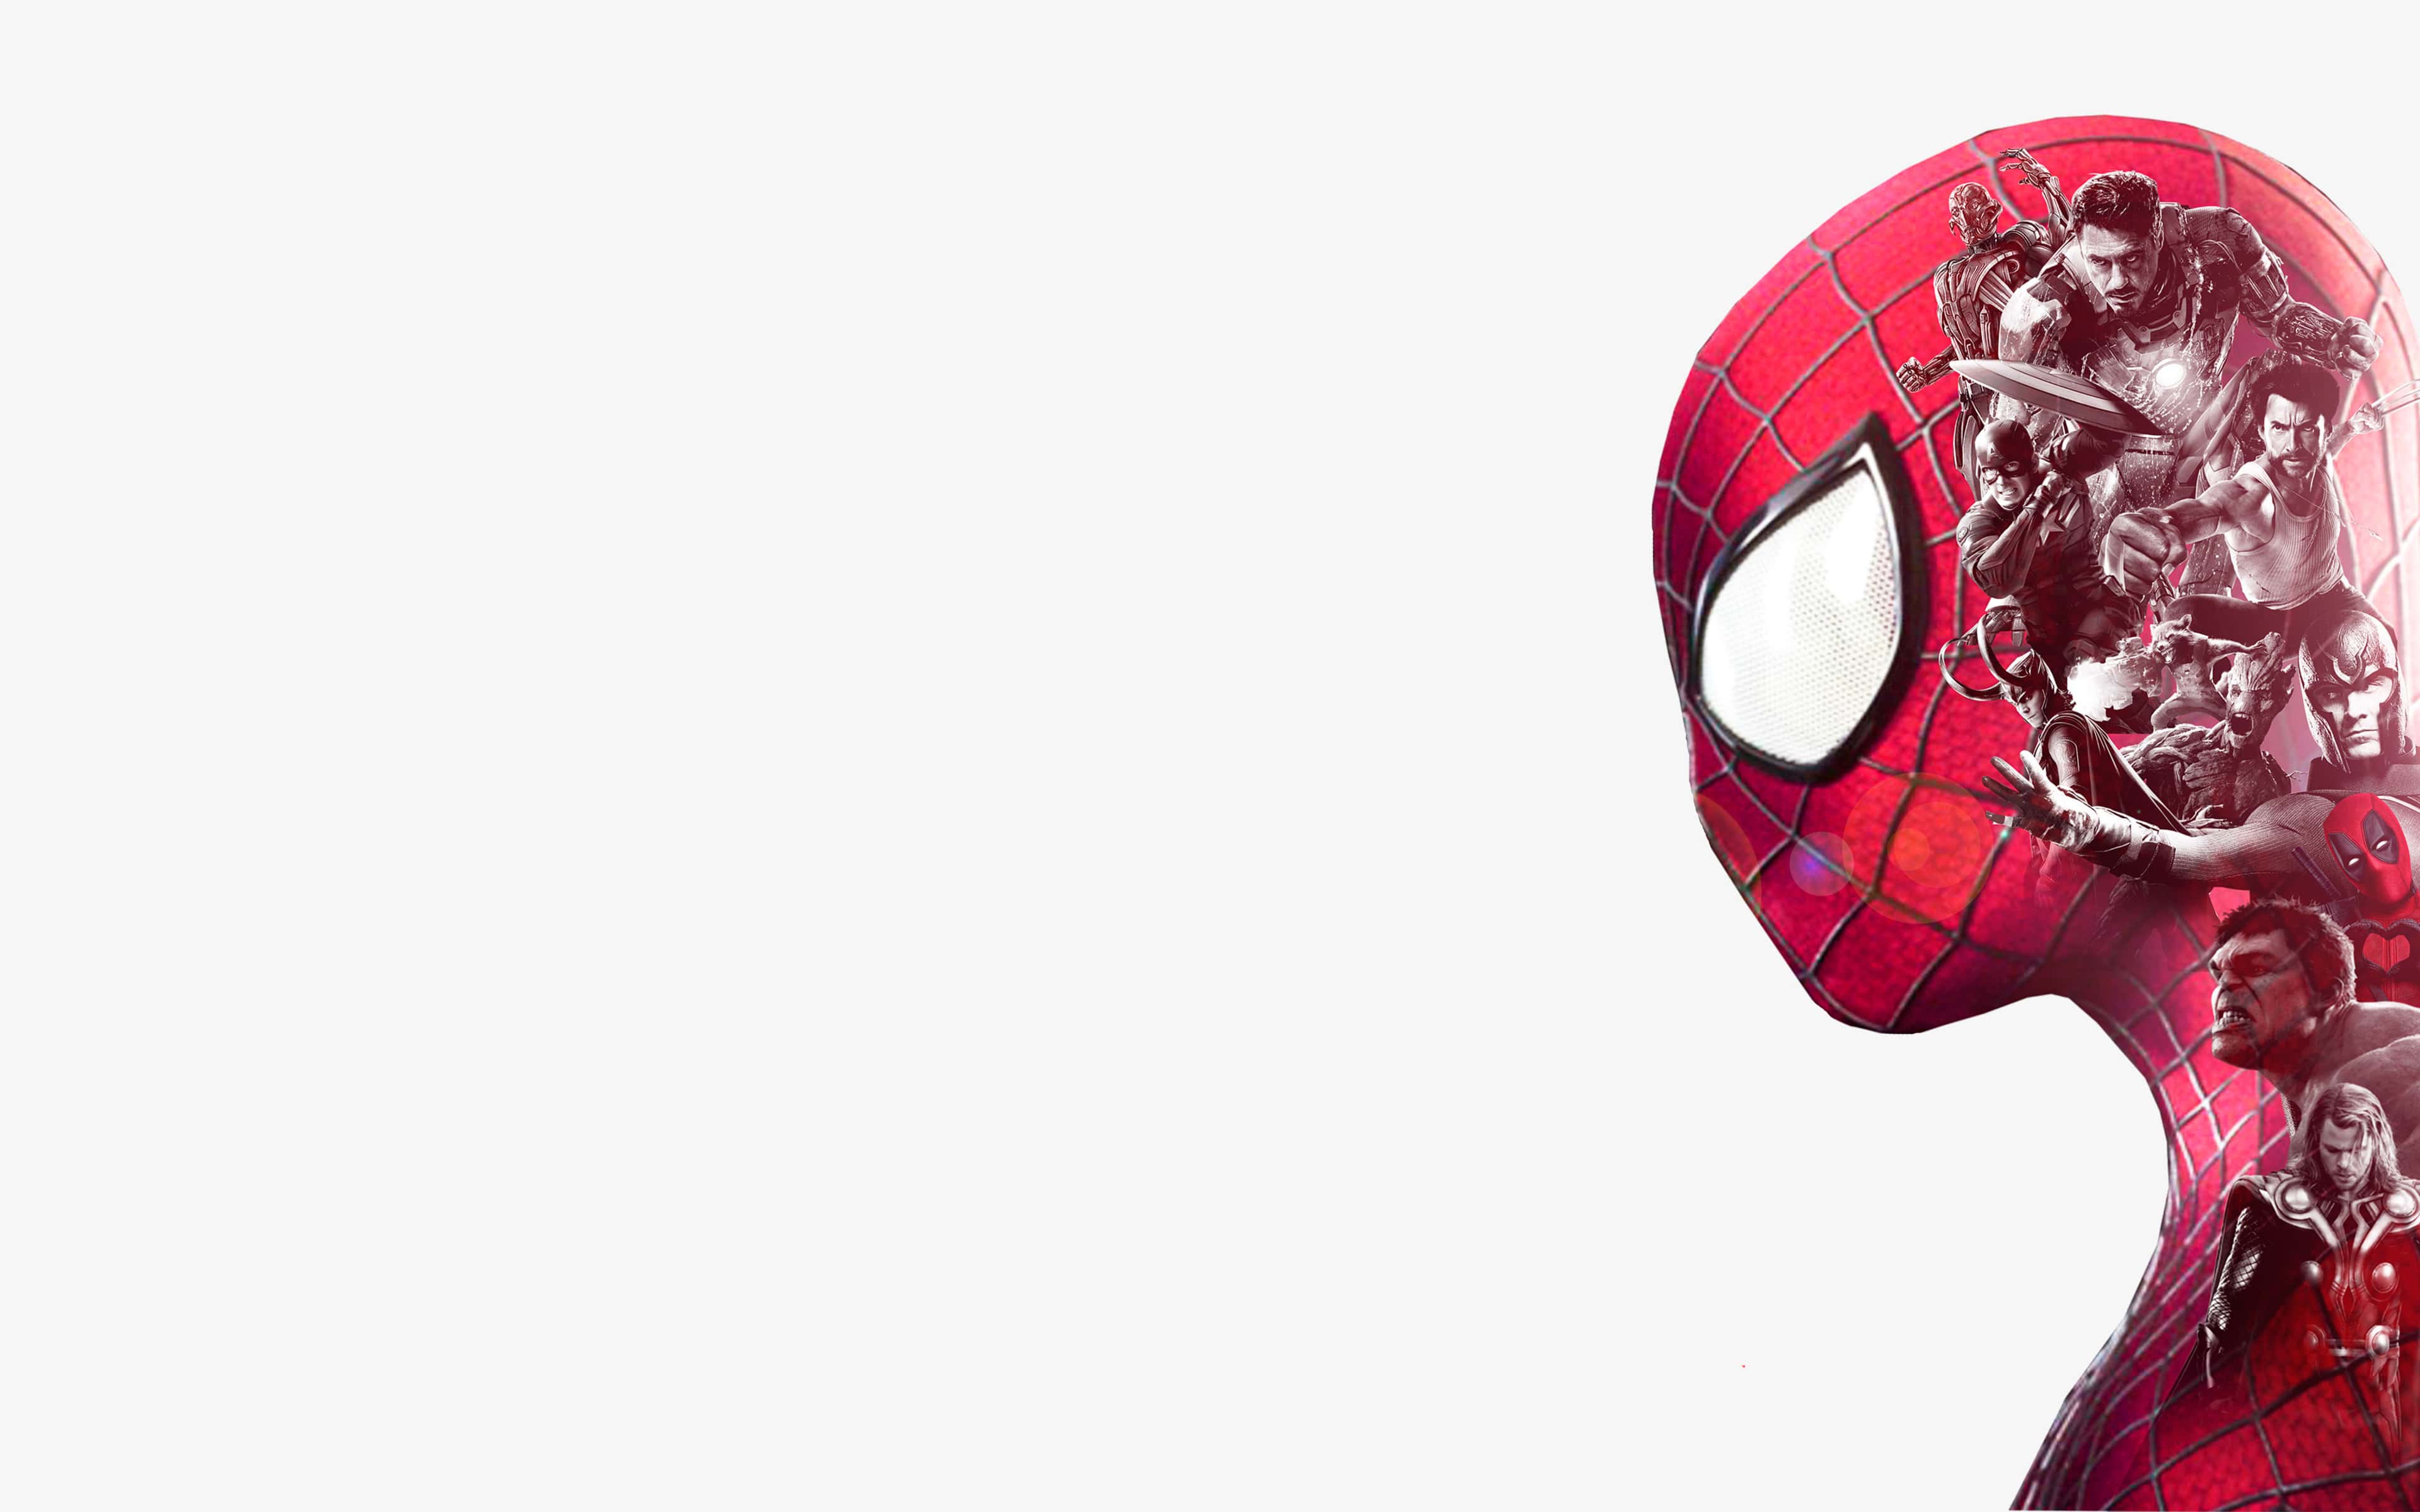 Superhero Spiderman Comic 4k Wallpaper and Free Stock